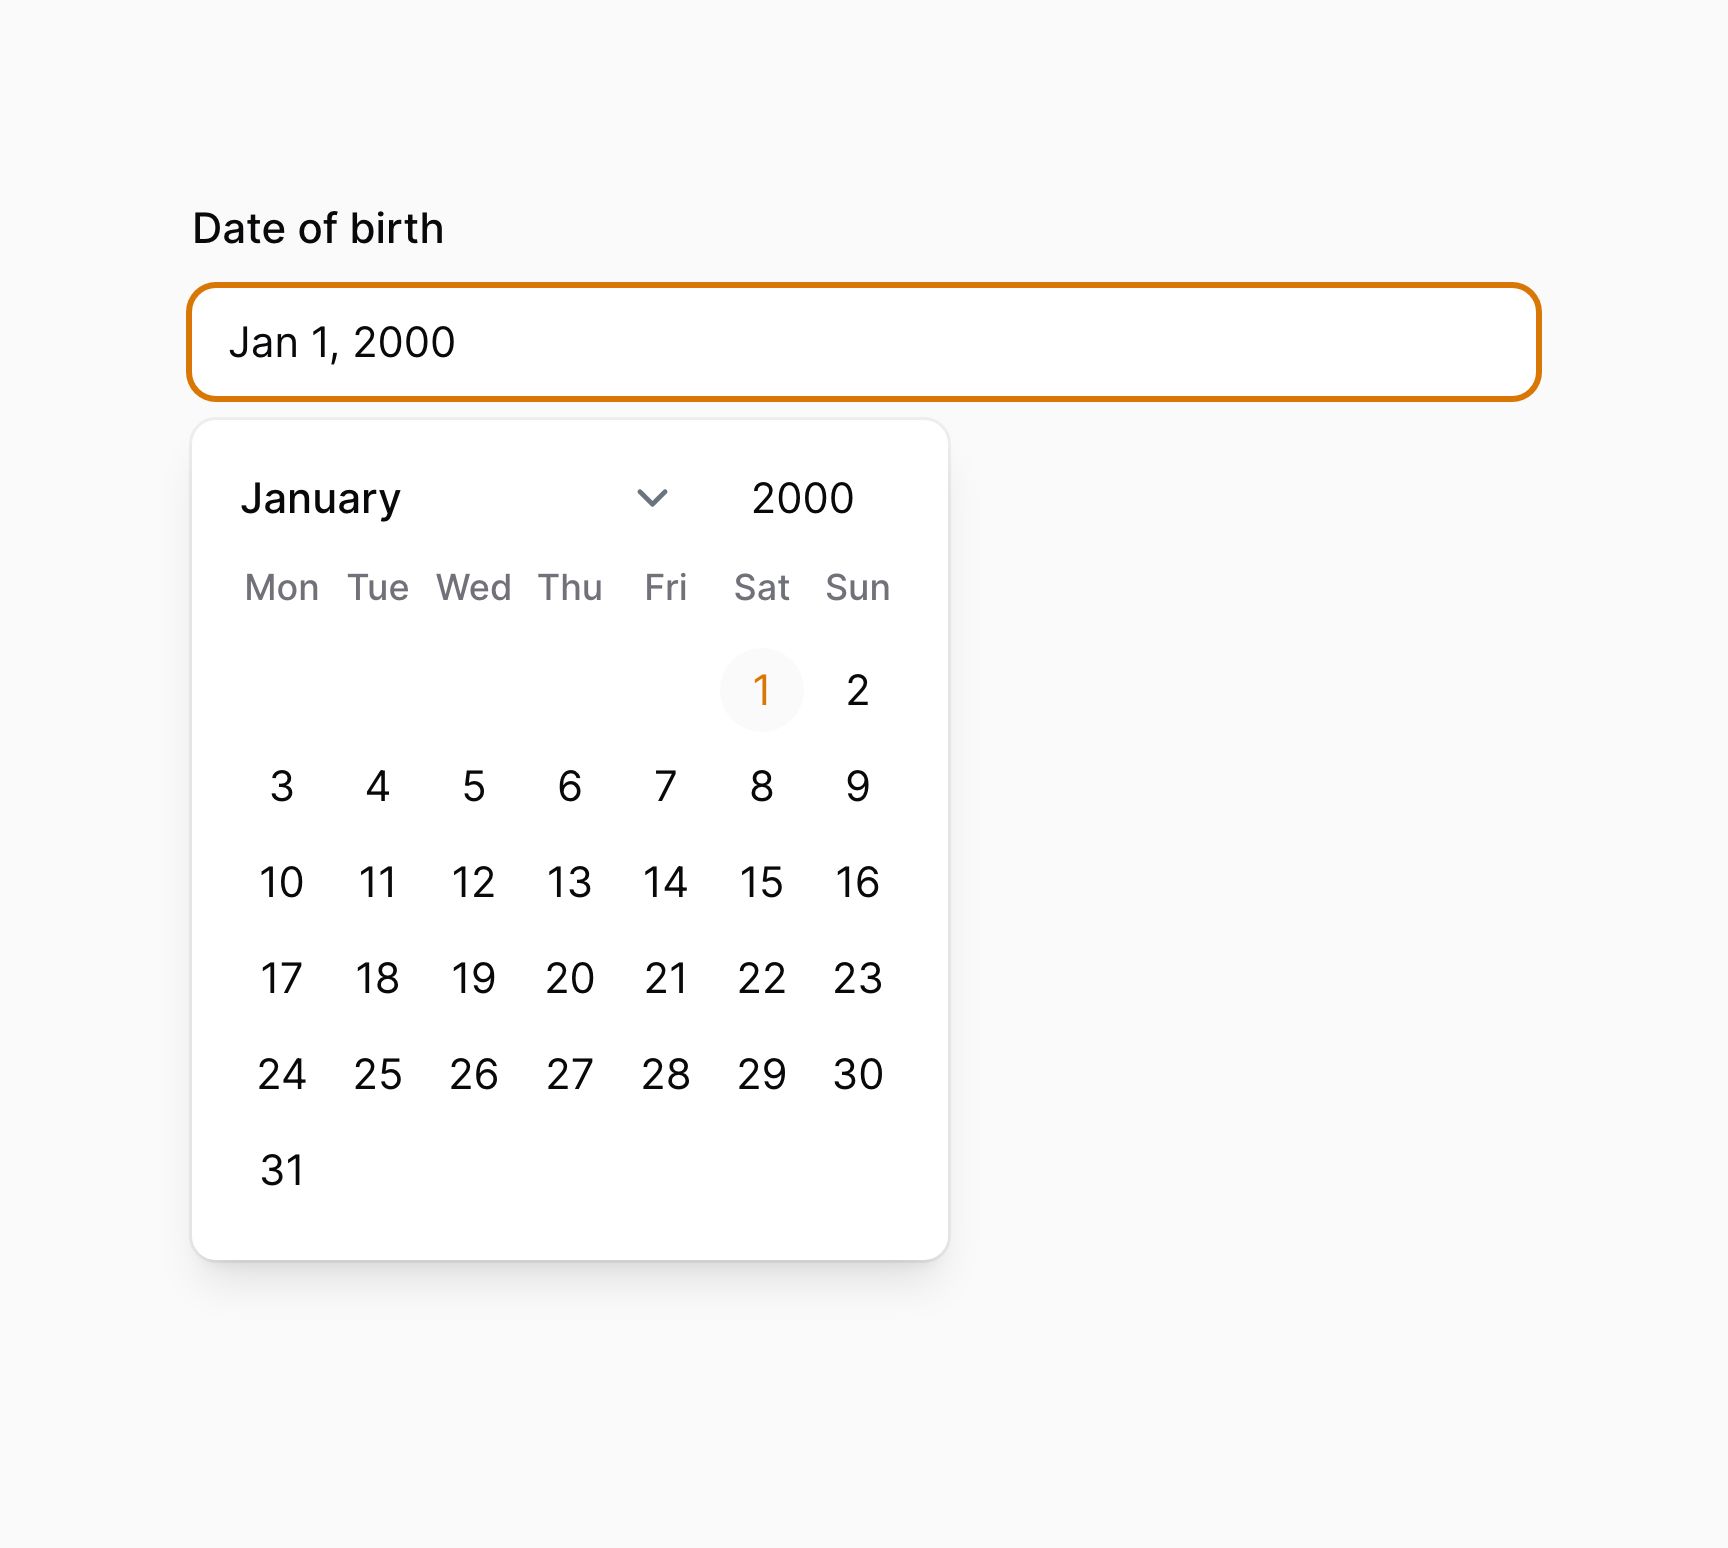 JavaScript-based date time picker